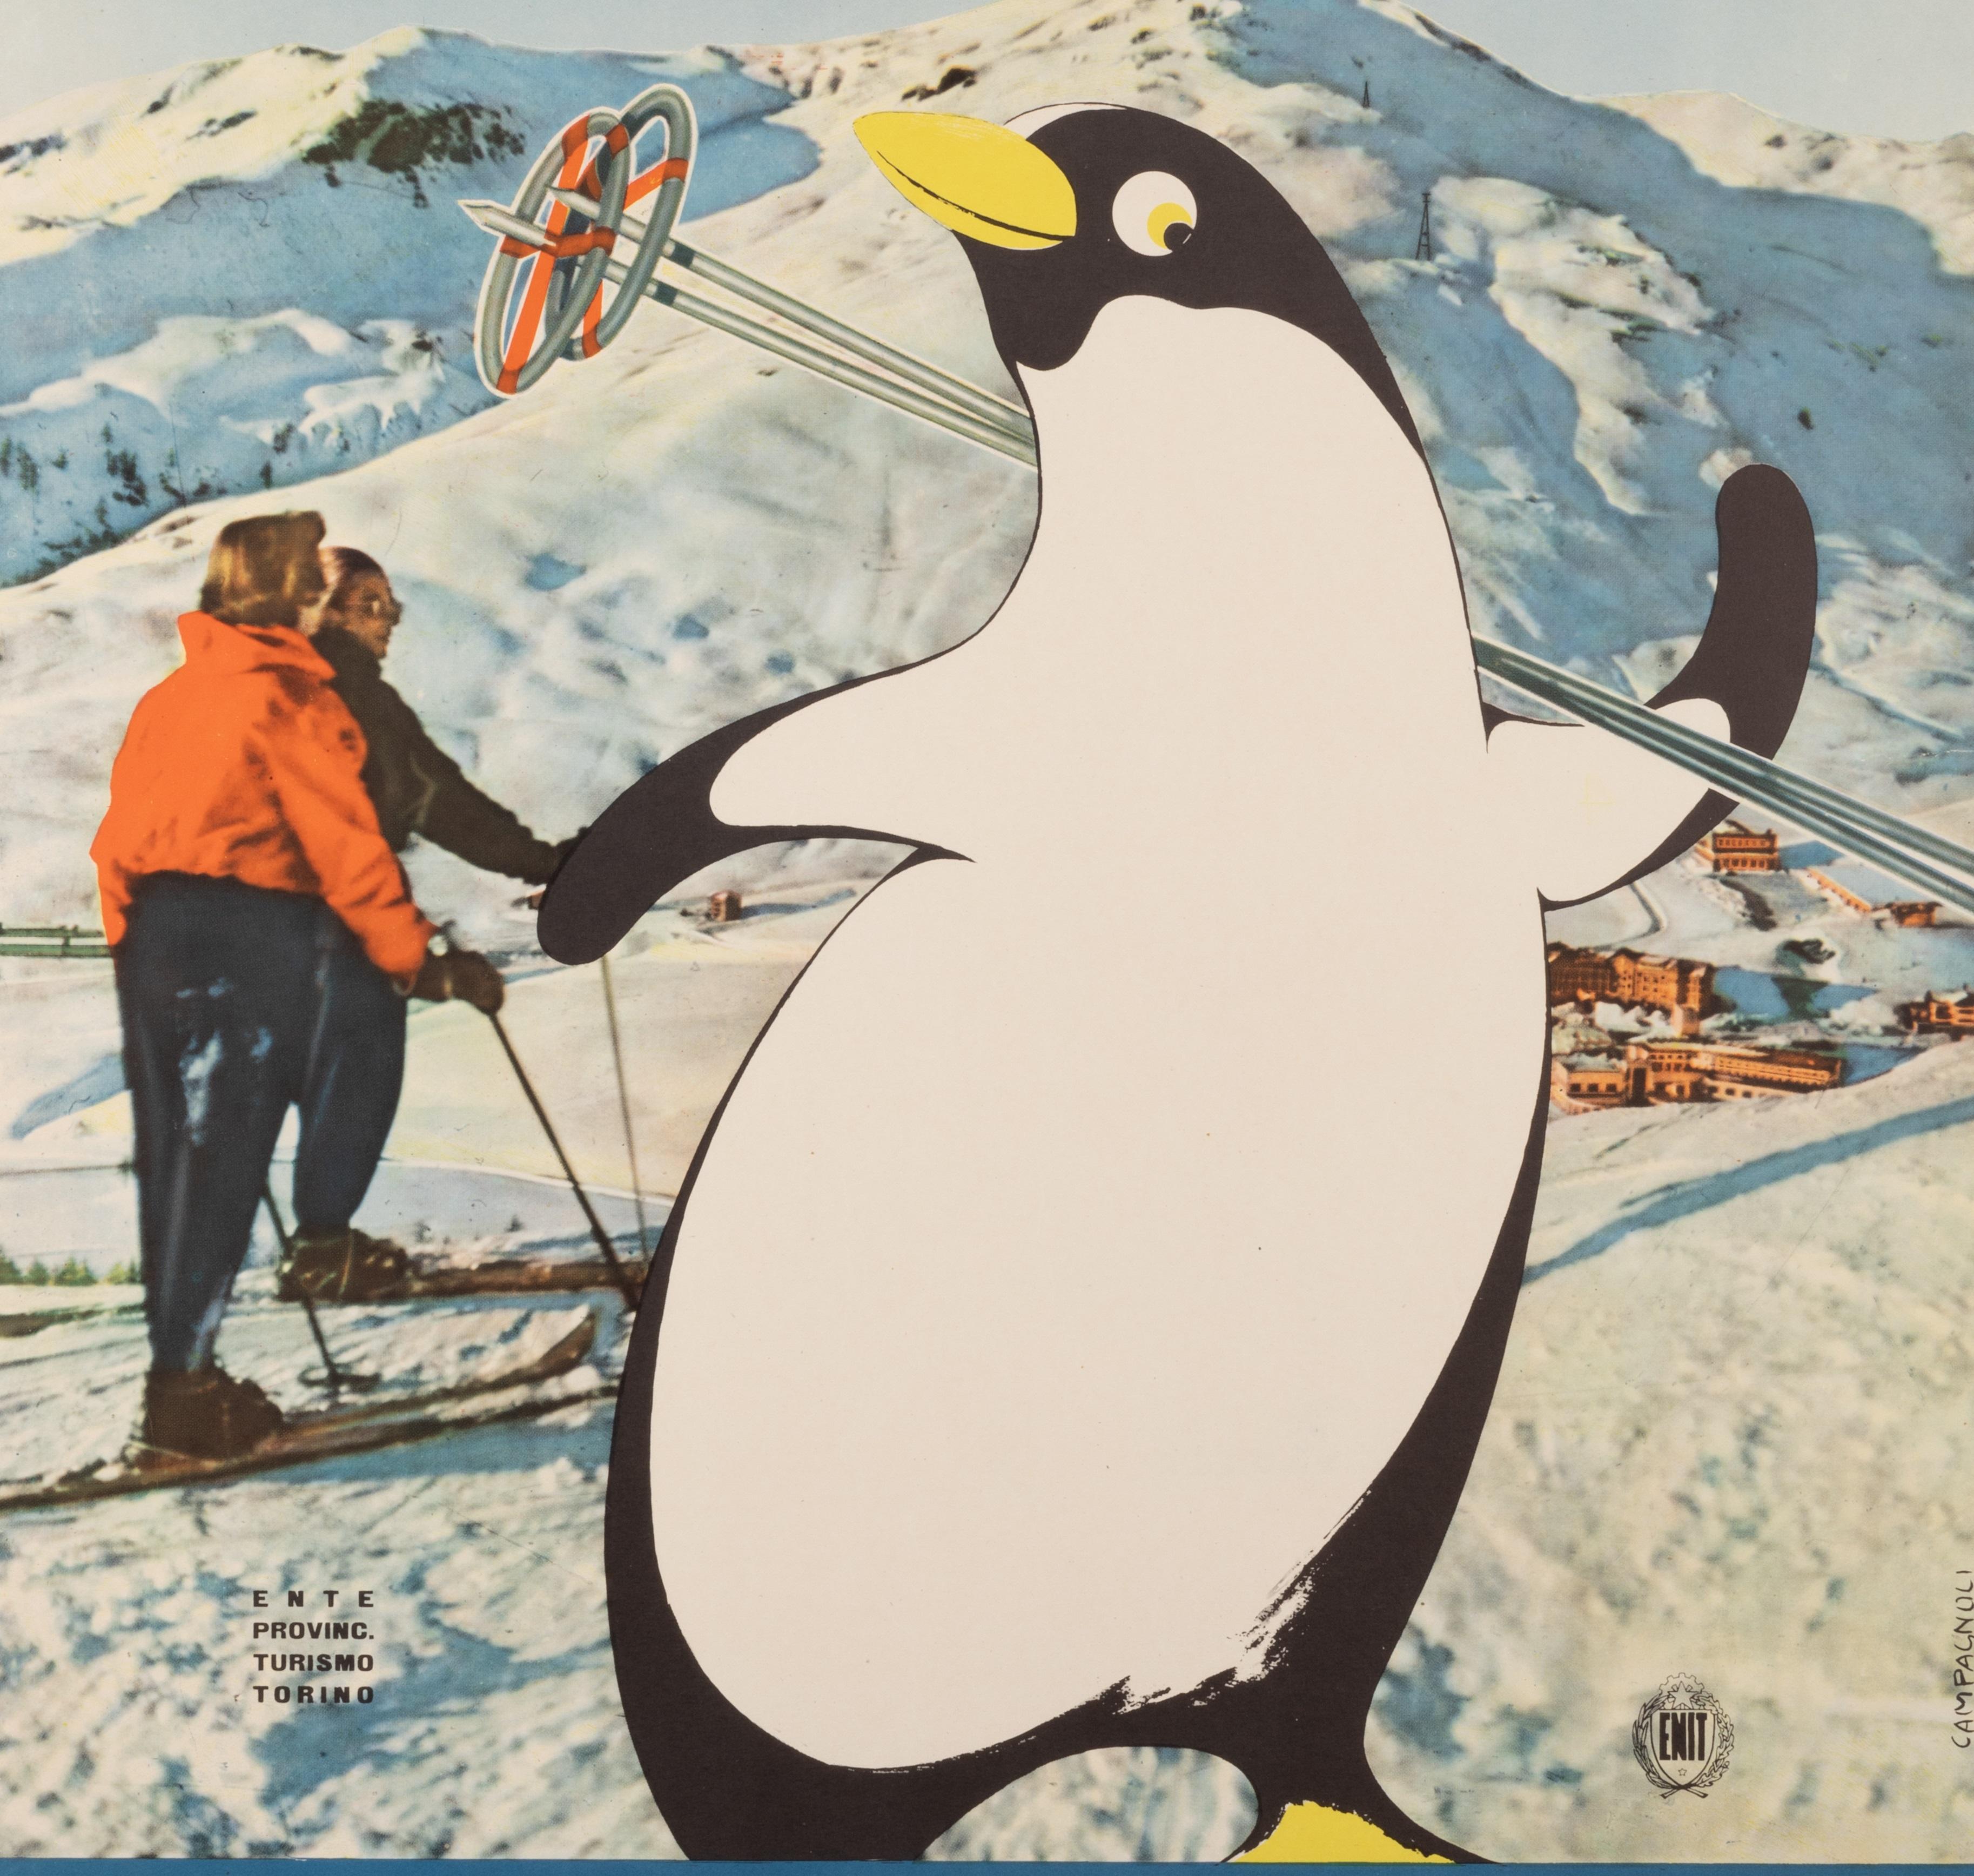 Original Vintage Poster for Winter Sports in Turin in Italy created by Campagnoli in 1955.

Artist: Campagnoli Adalberto 
Title: Turin – Sports d’Hiver - Italie
Date: circa 1955
Size: 24.4 x 39.8 in. / 62 x 101 cm.
Printer: ROGGERO ET TORTIA,